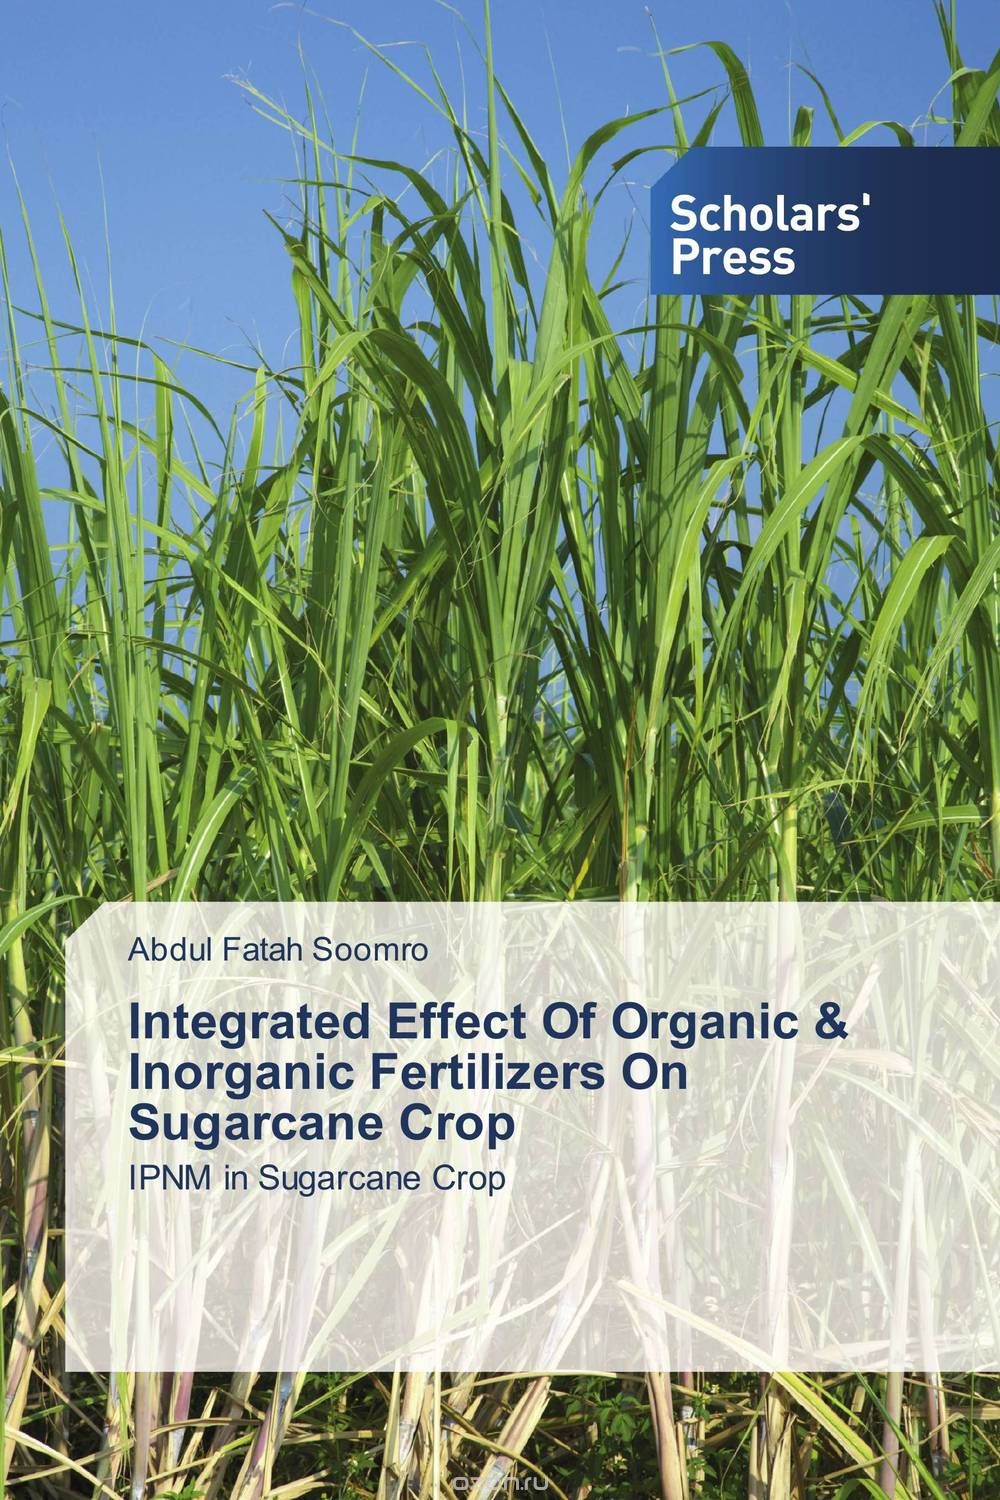 Integrated Effect Of Organic & Inorganic Fertilizers On Sugarcane Crop